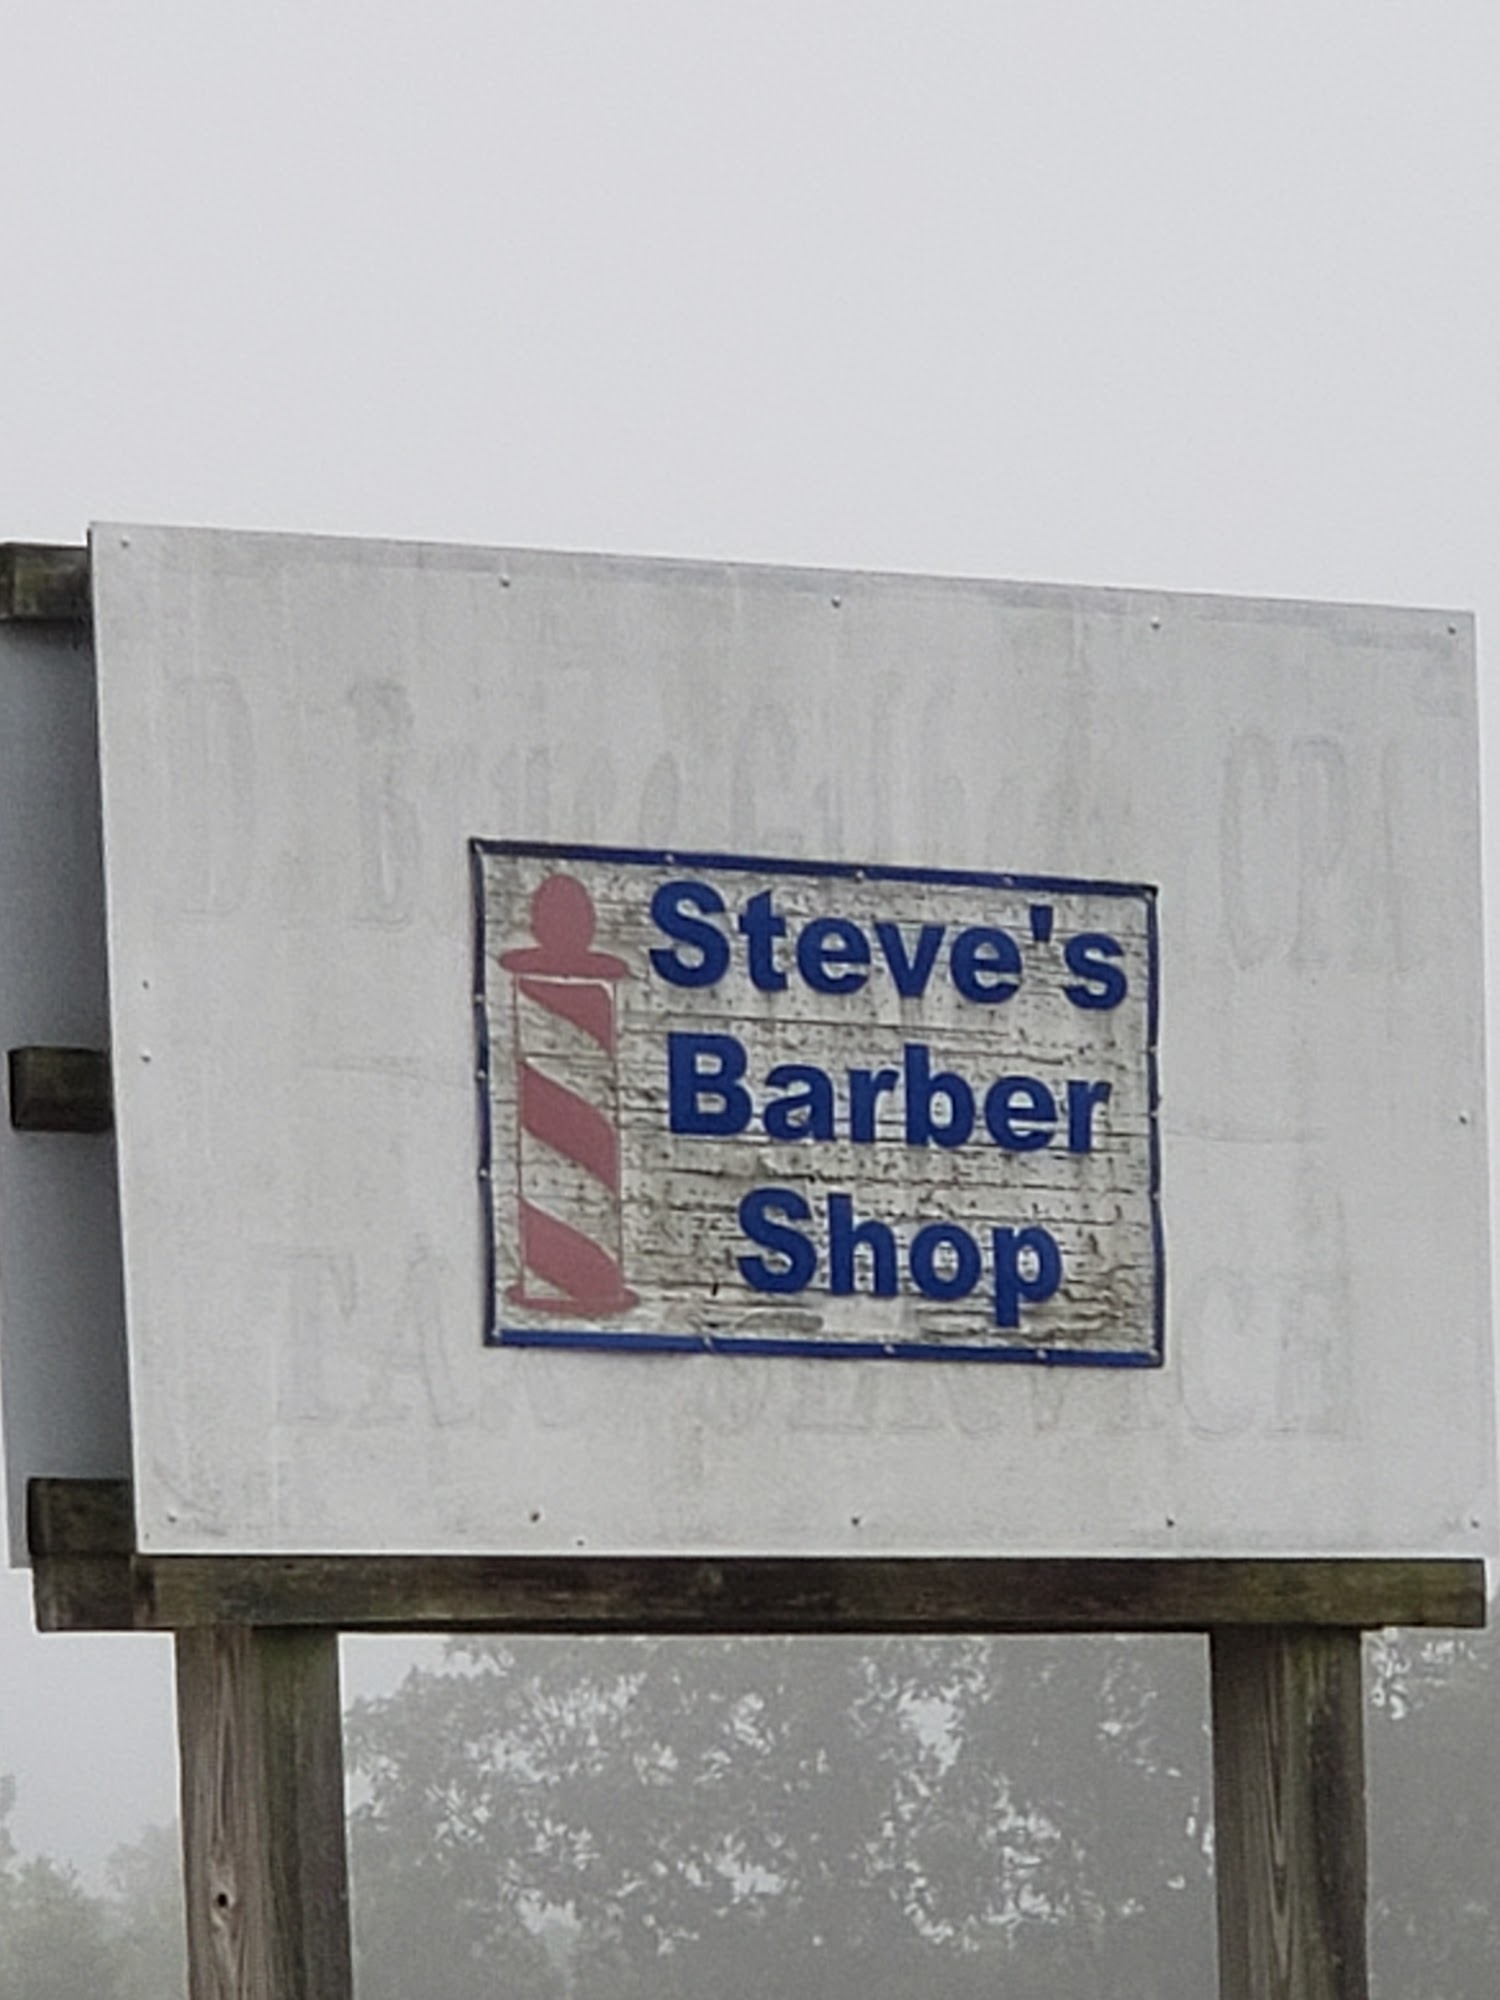 Steve's Barber Shop 350 S Main St, Gravois Mills Missouri 65037